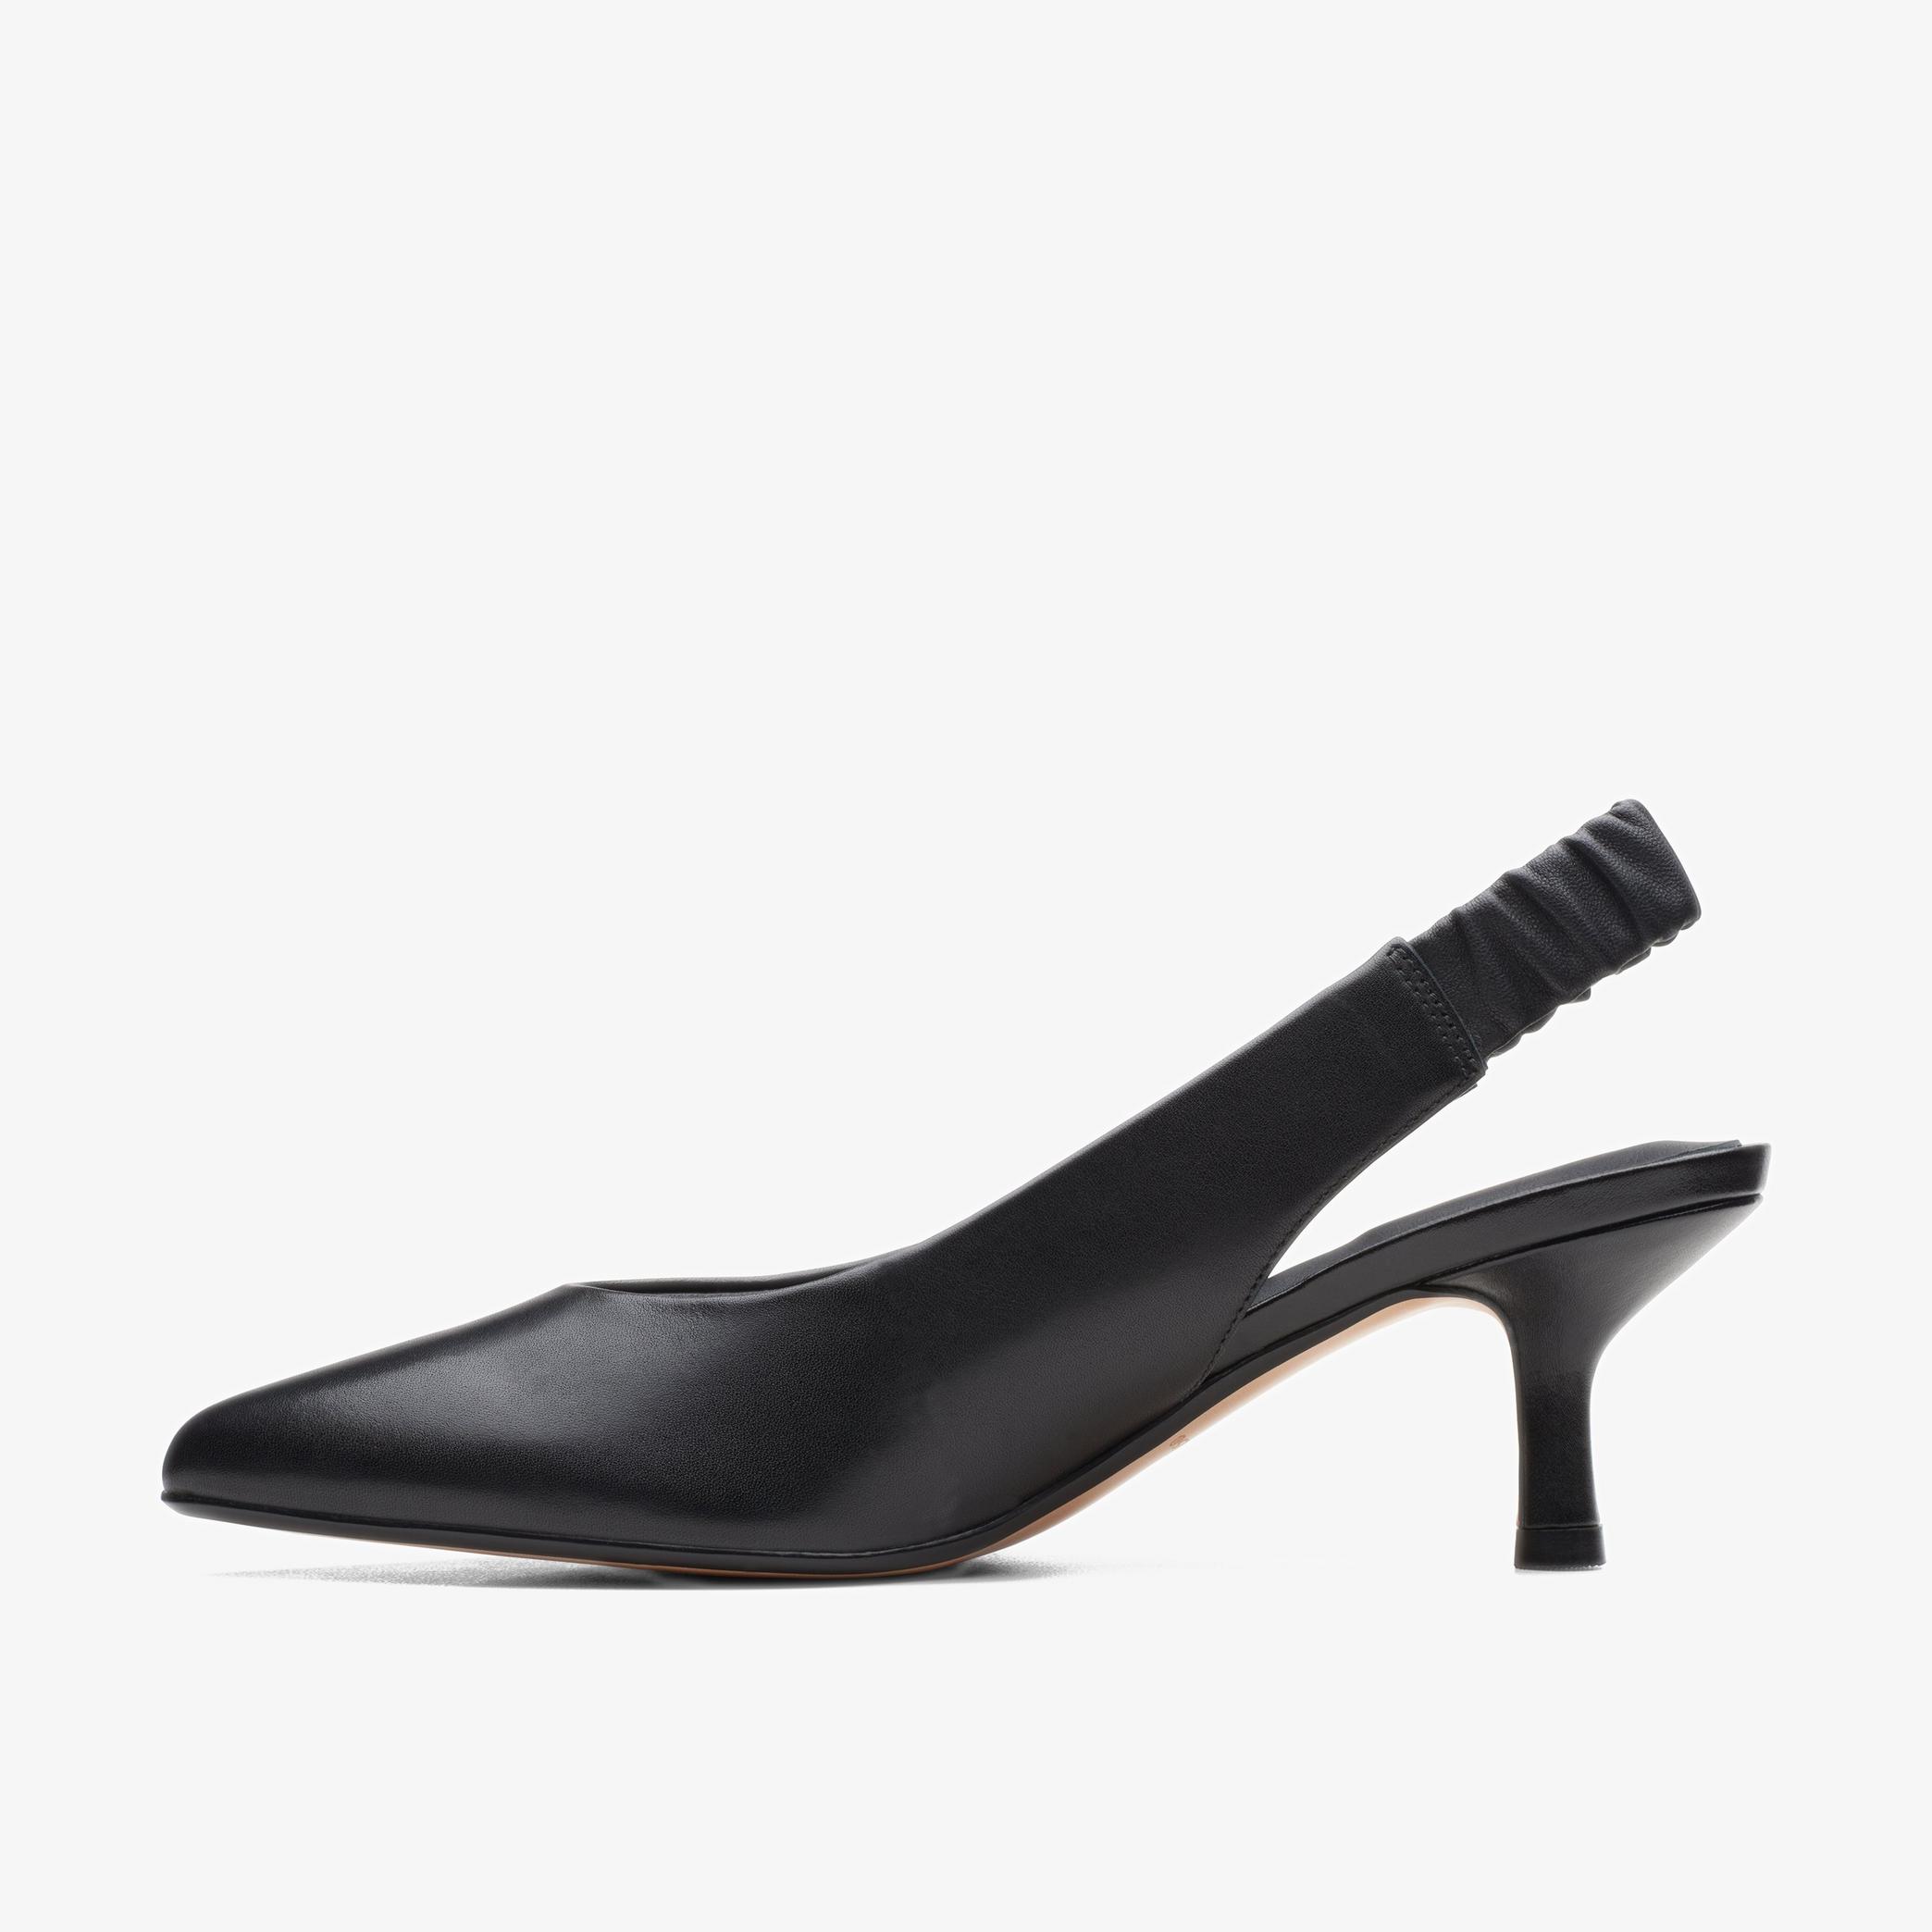 WOMENS Violet55 Sling Black Leather Court Shoes | Clarks Outlet